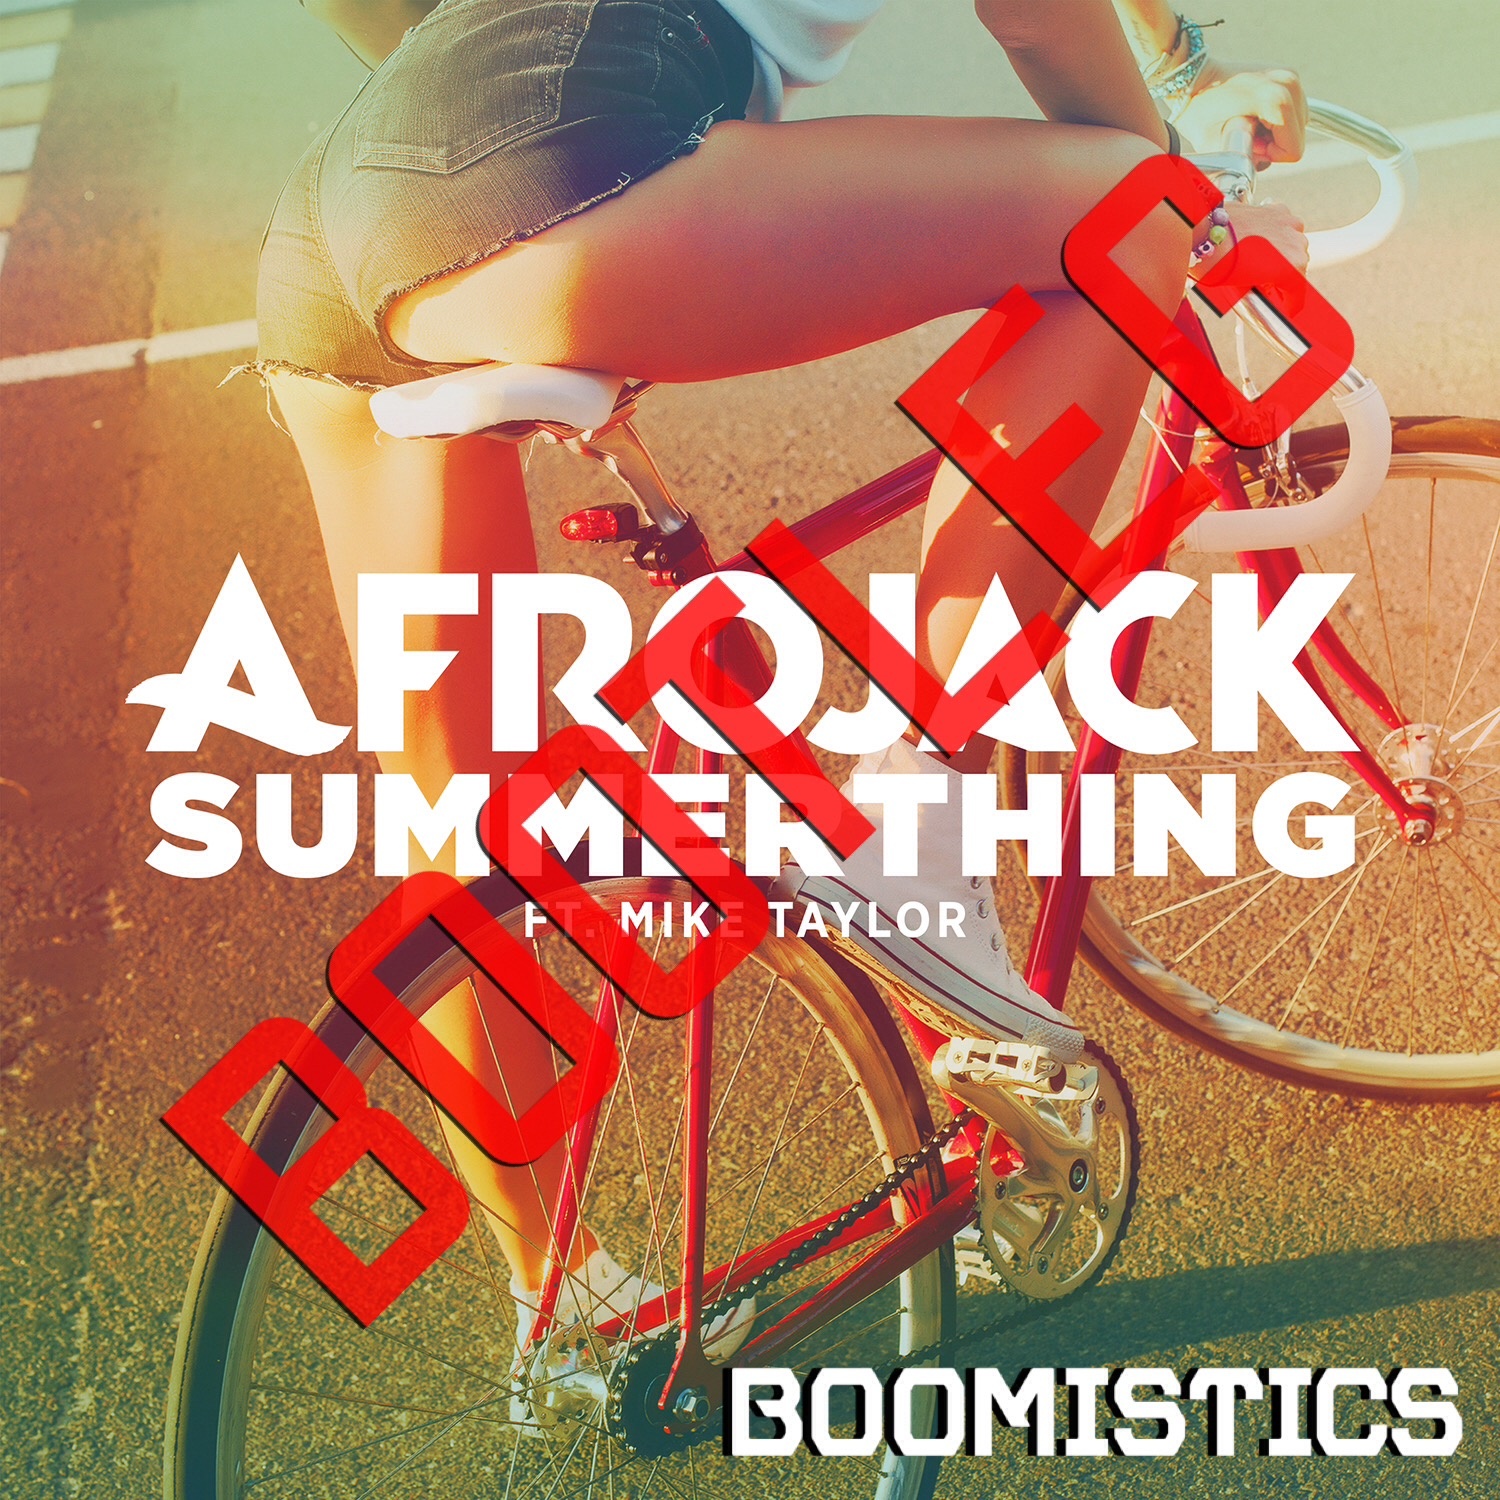 SummerThing! (ft. Mike Taylor) [Boomistics Bootleg]